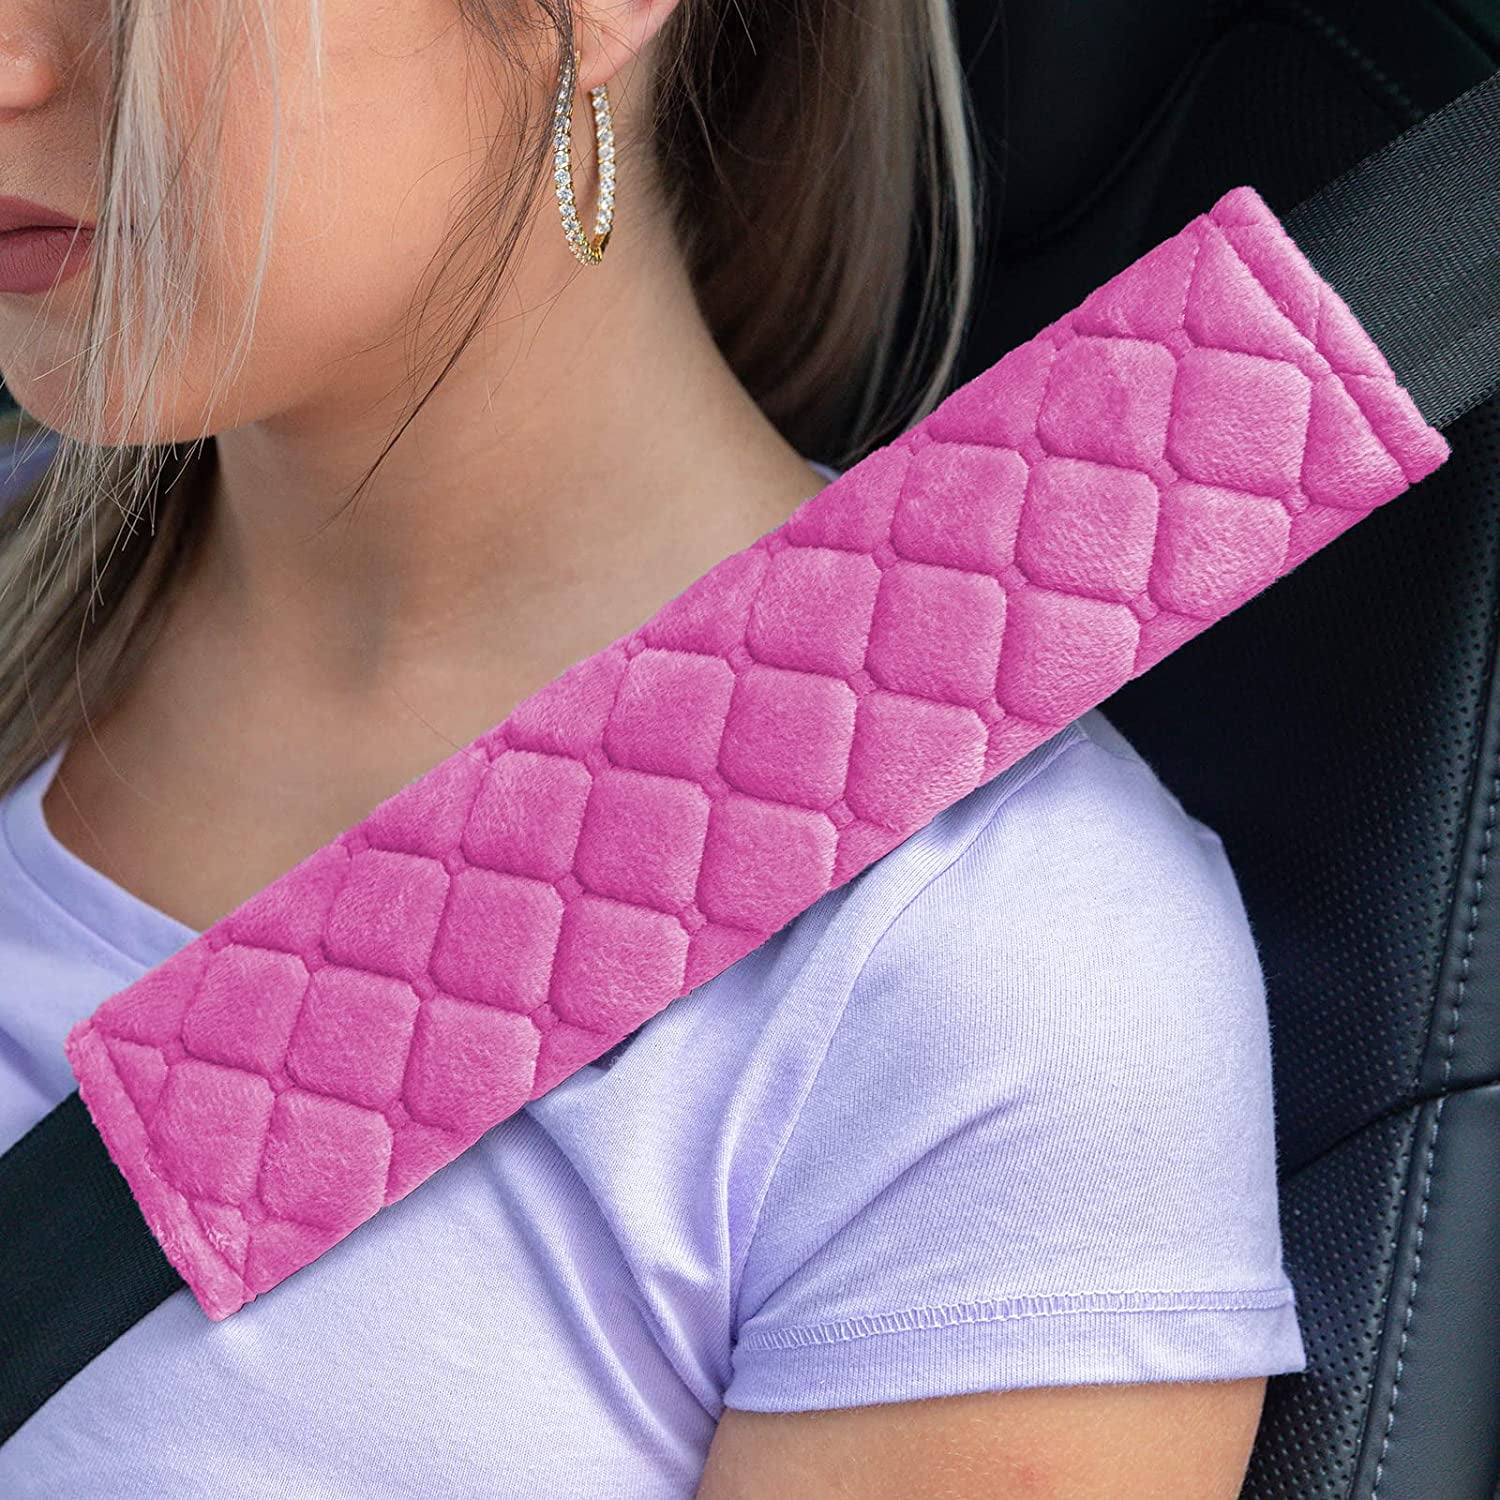 Casewin 2 Pcs Car Seat Belt Cover Pads, Shoulder Seatbelt Pads